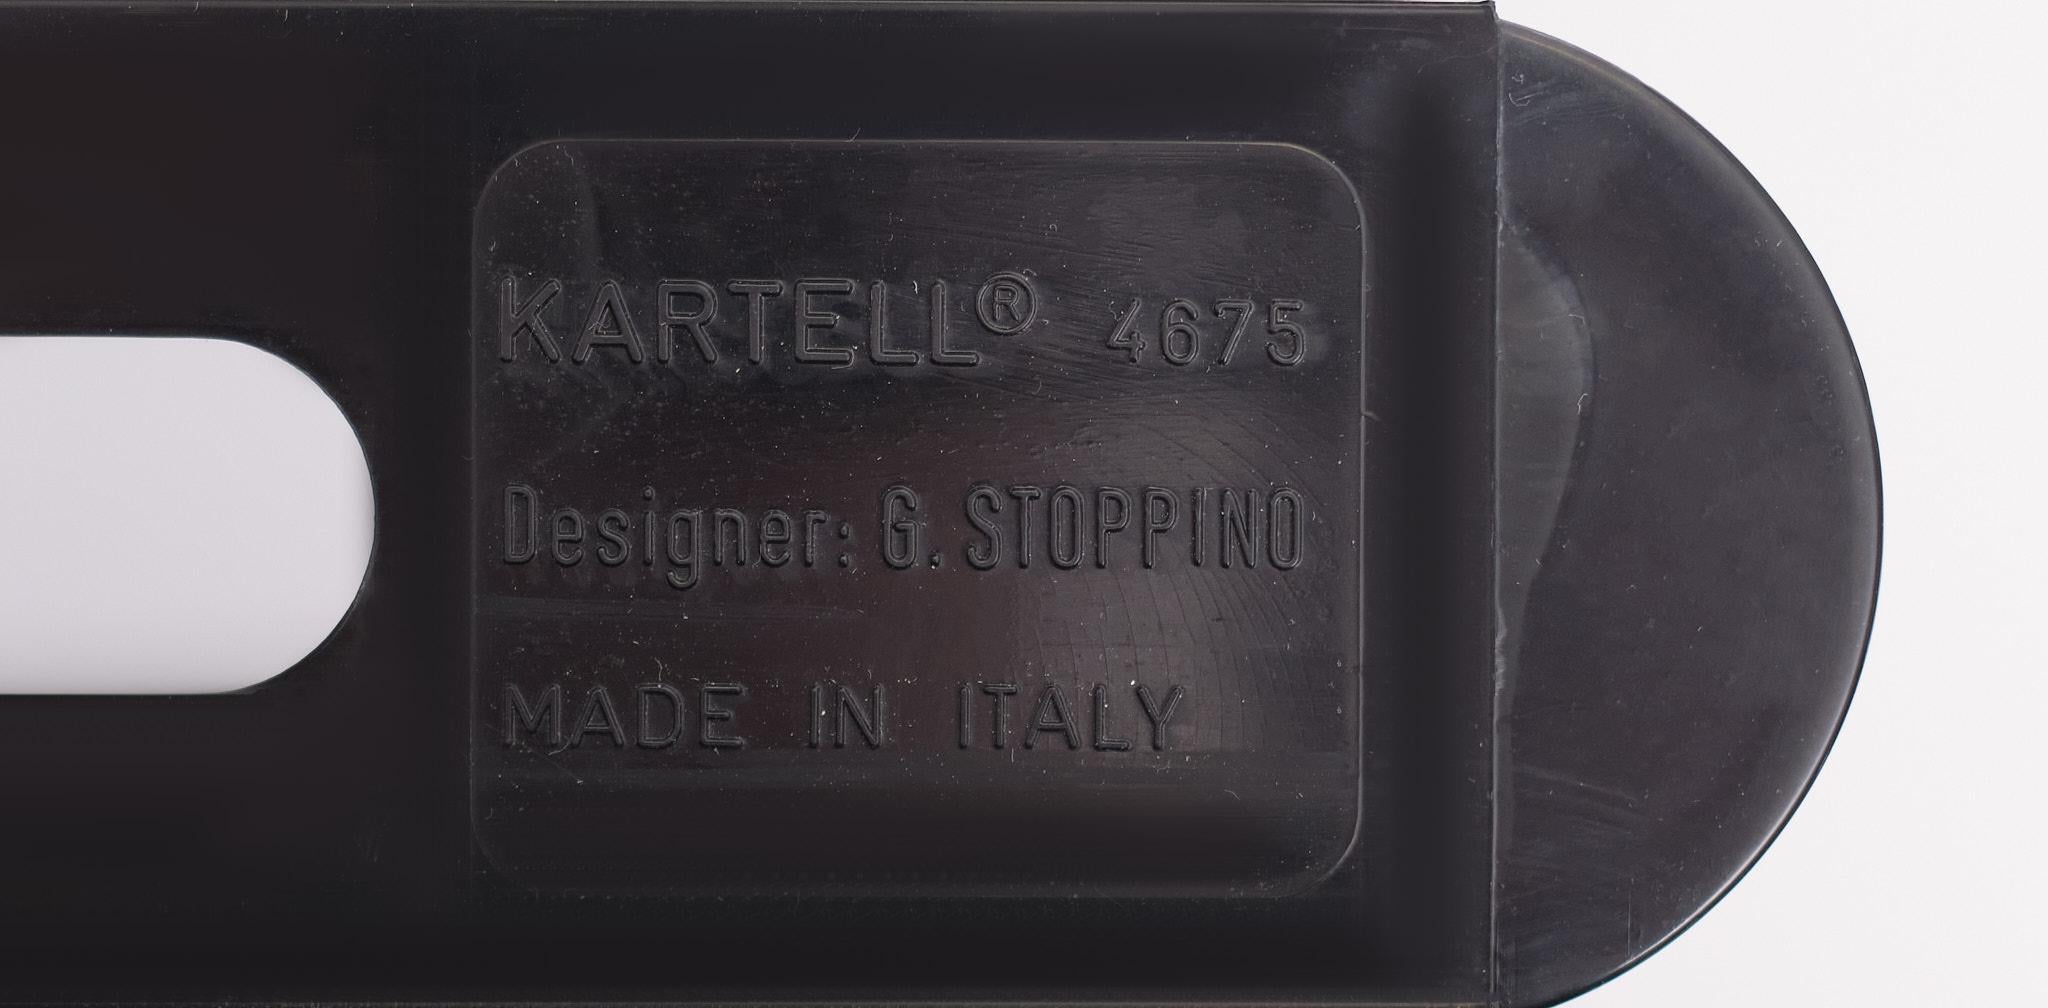 Plastic Giotto Stoppino for Kartell, Magazine rack 1970s Italy